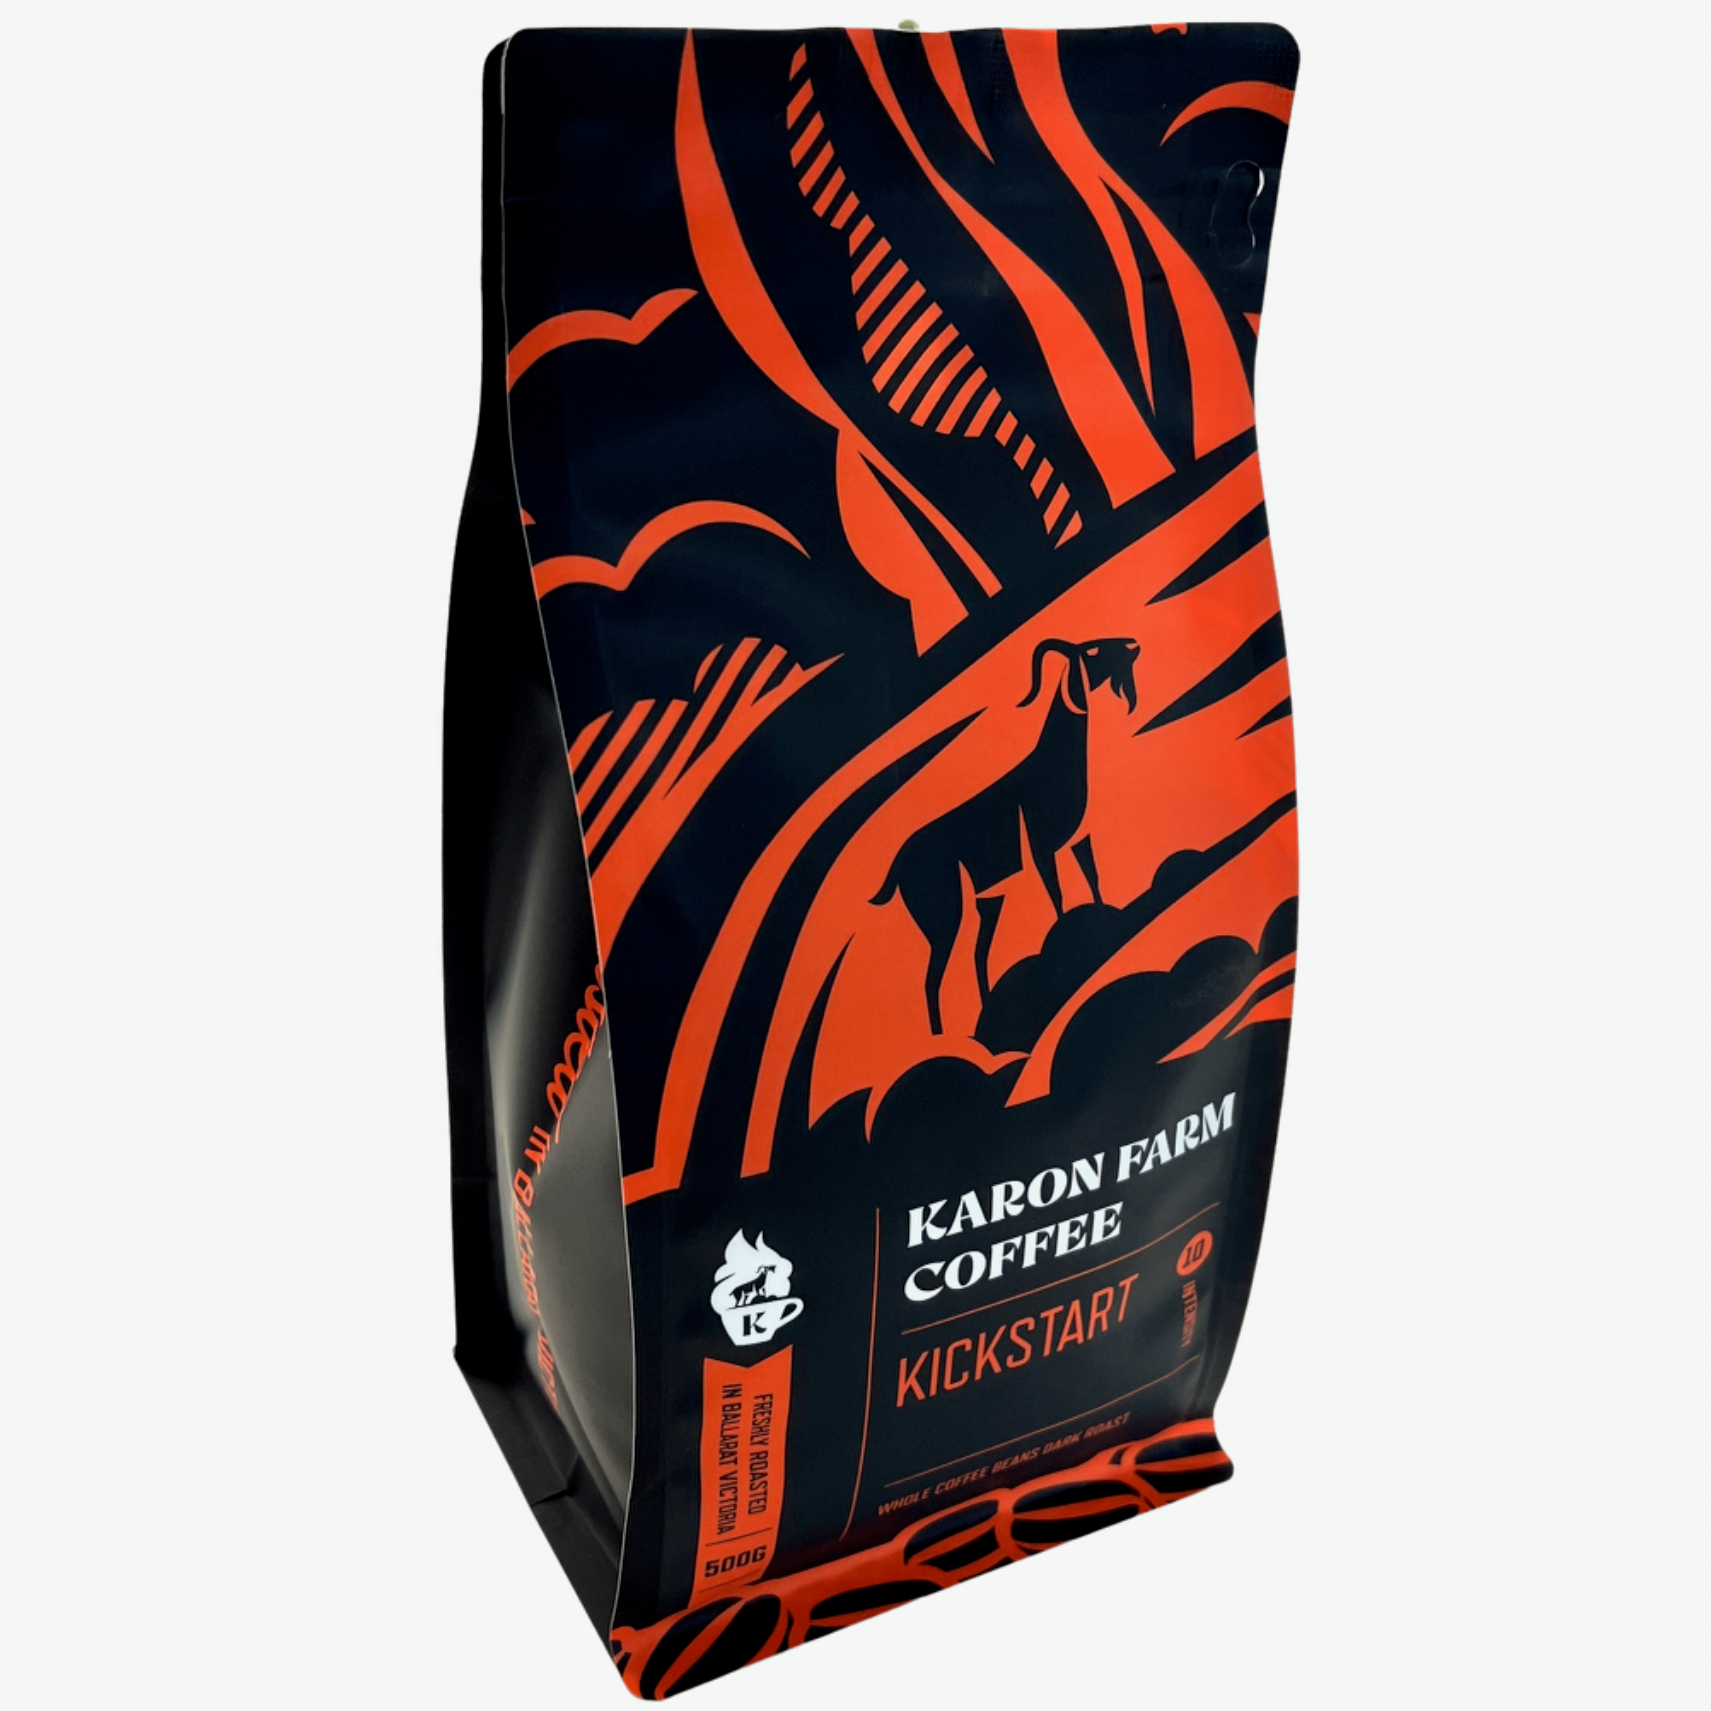 Kickstart coffee ballarat strong coffee espresso